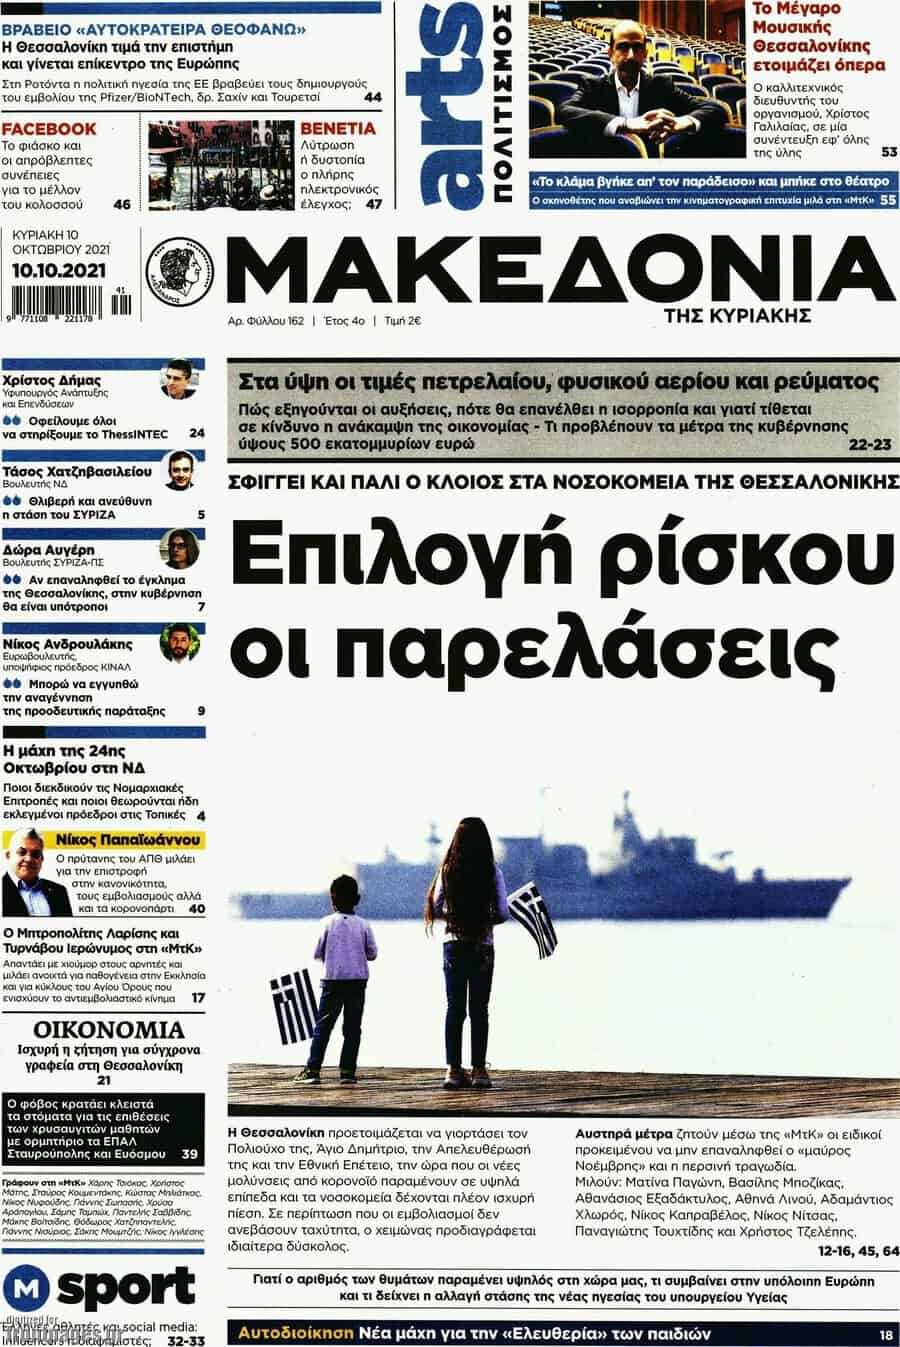 MakedoniaI10oct21